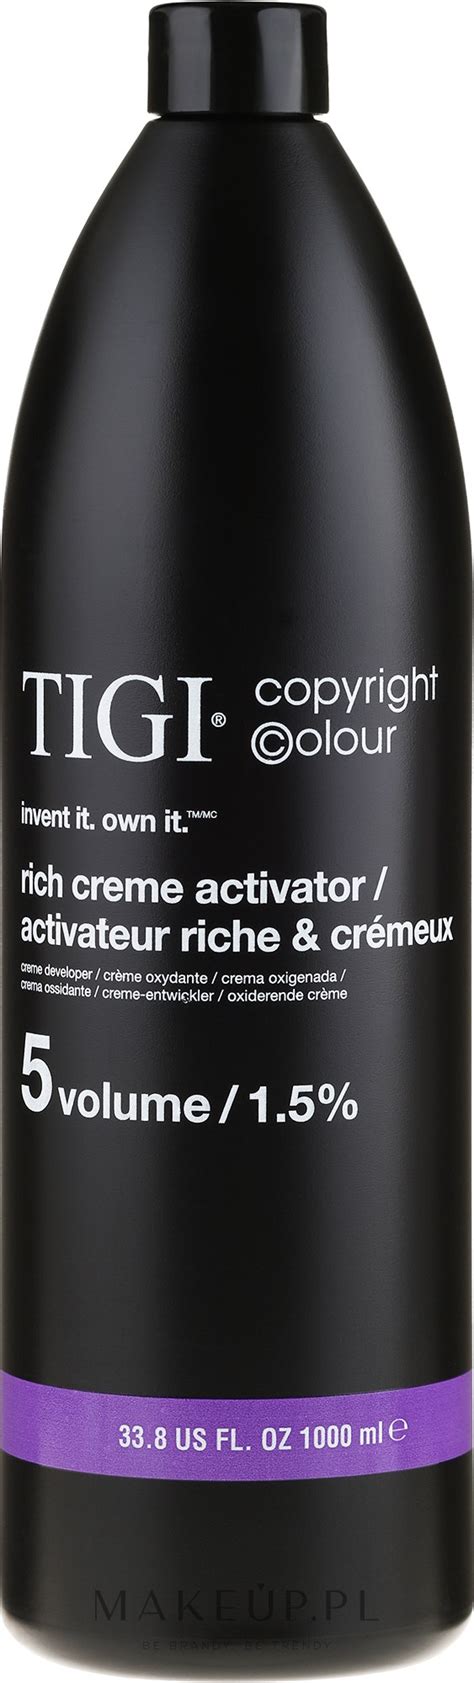 TIGI Colour Activator Aktywator Vol Makeup Pl